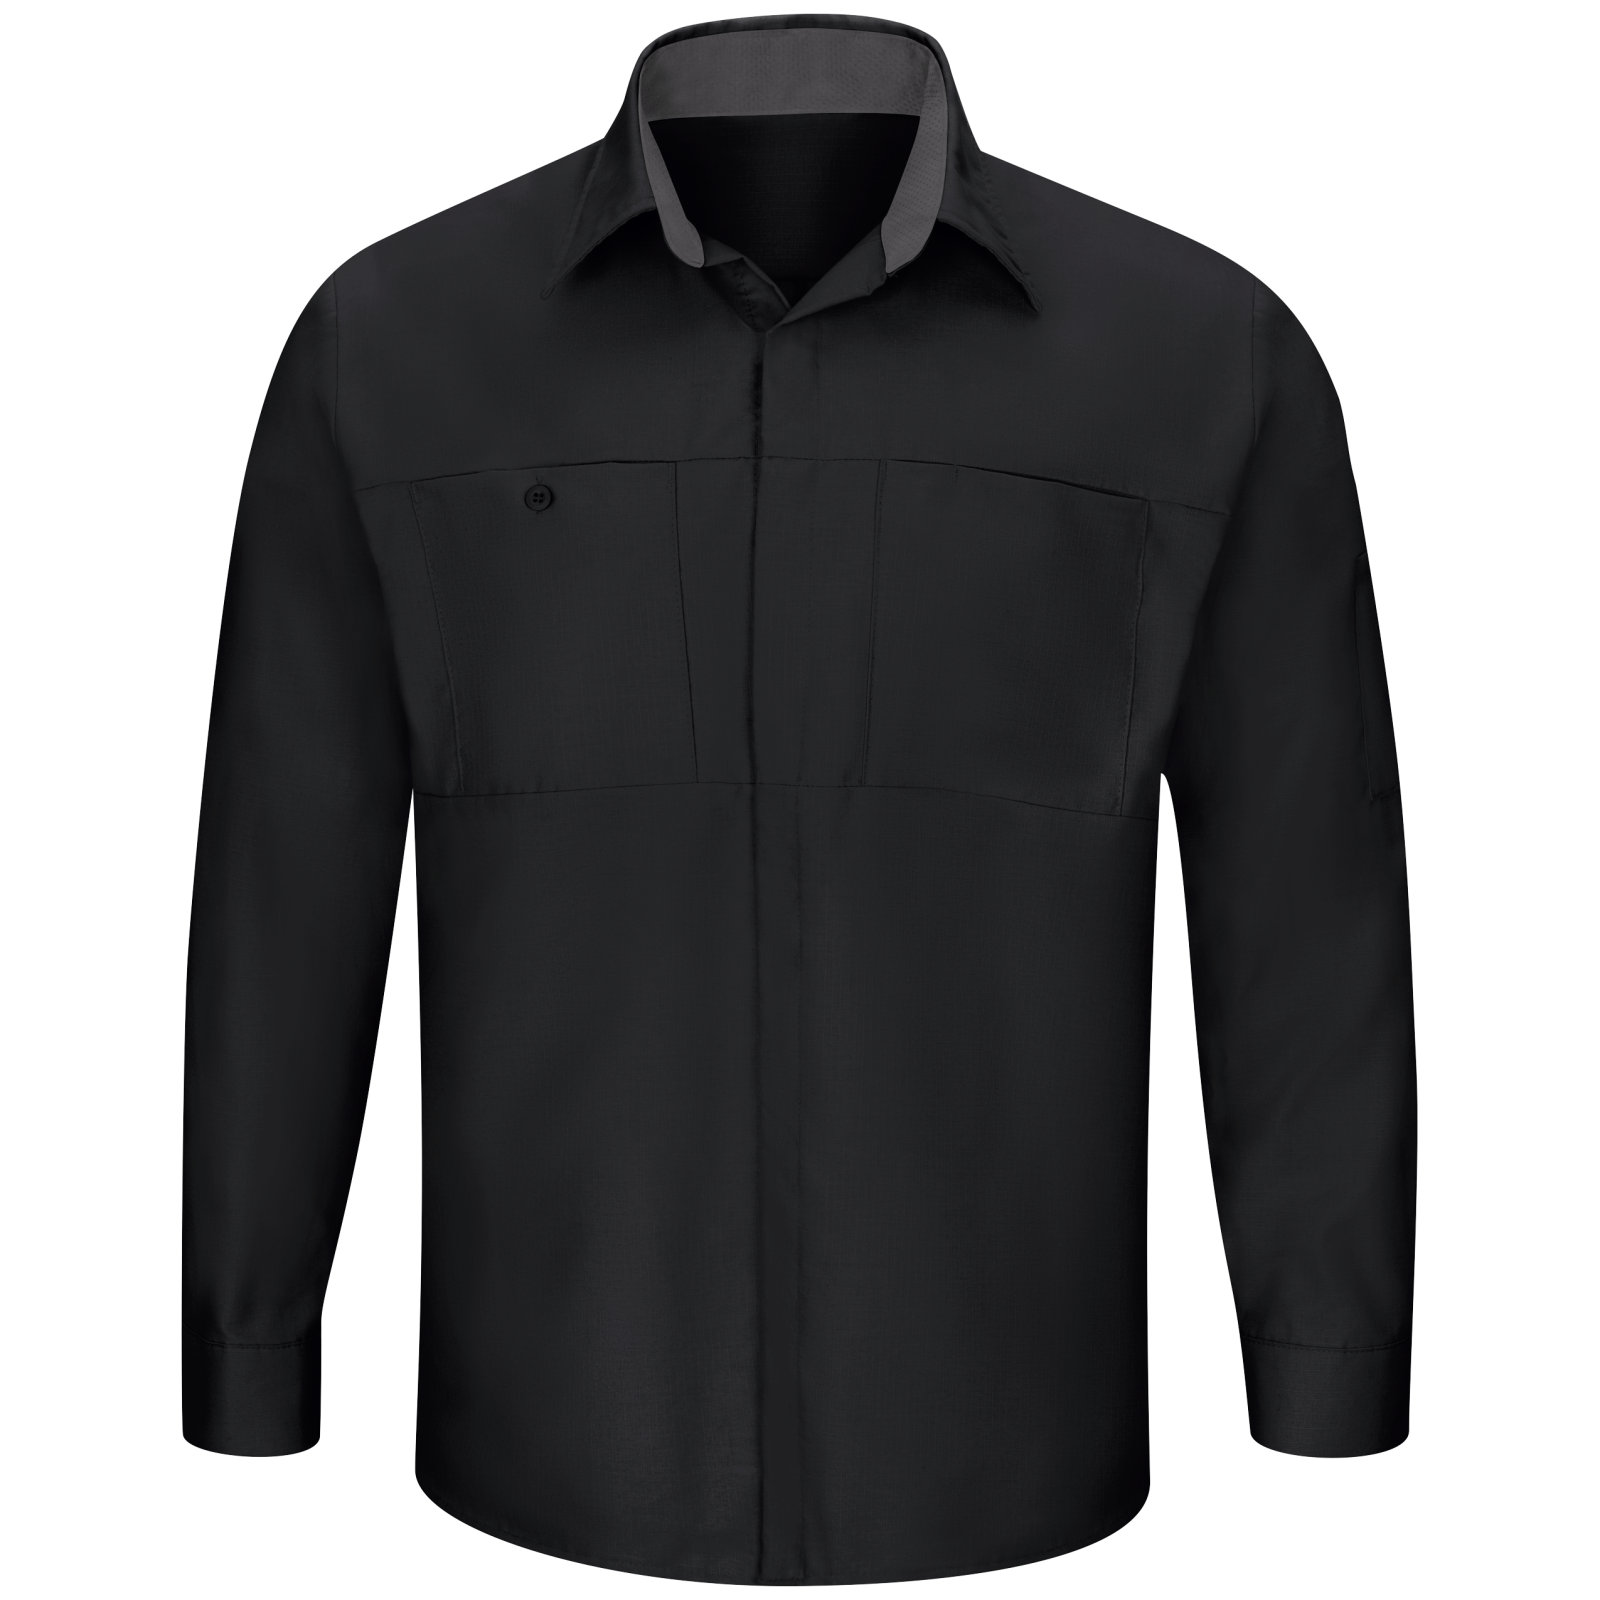 Red Kap Mens Long Sleeve Performance Plus Shop Shirt with OilBlok Technology 